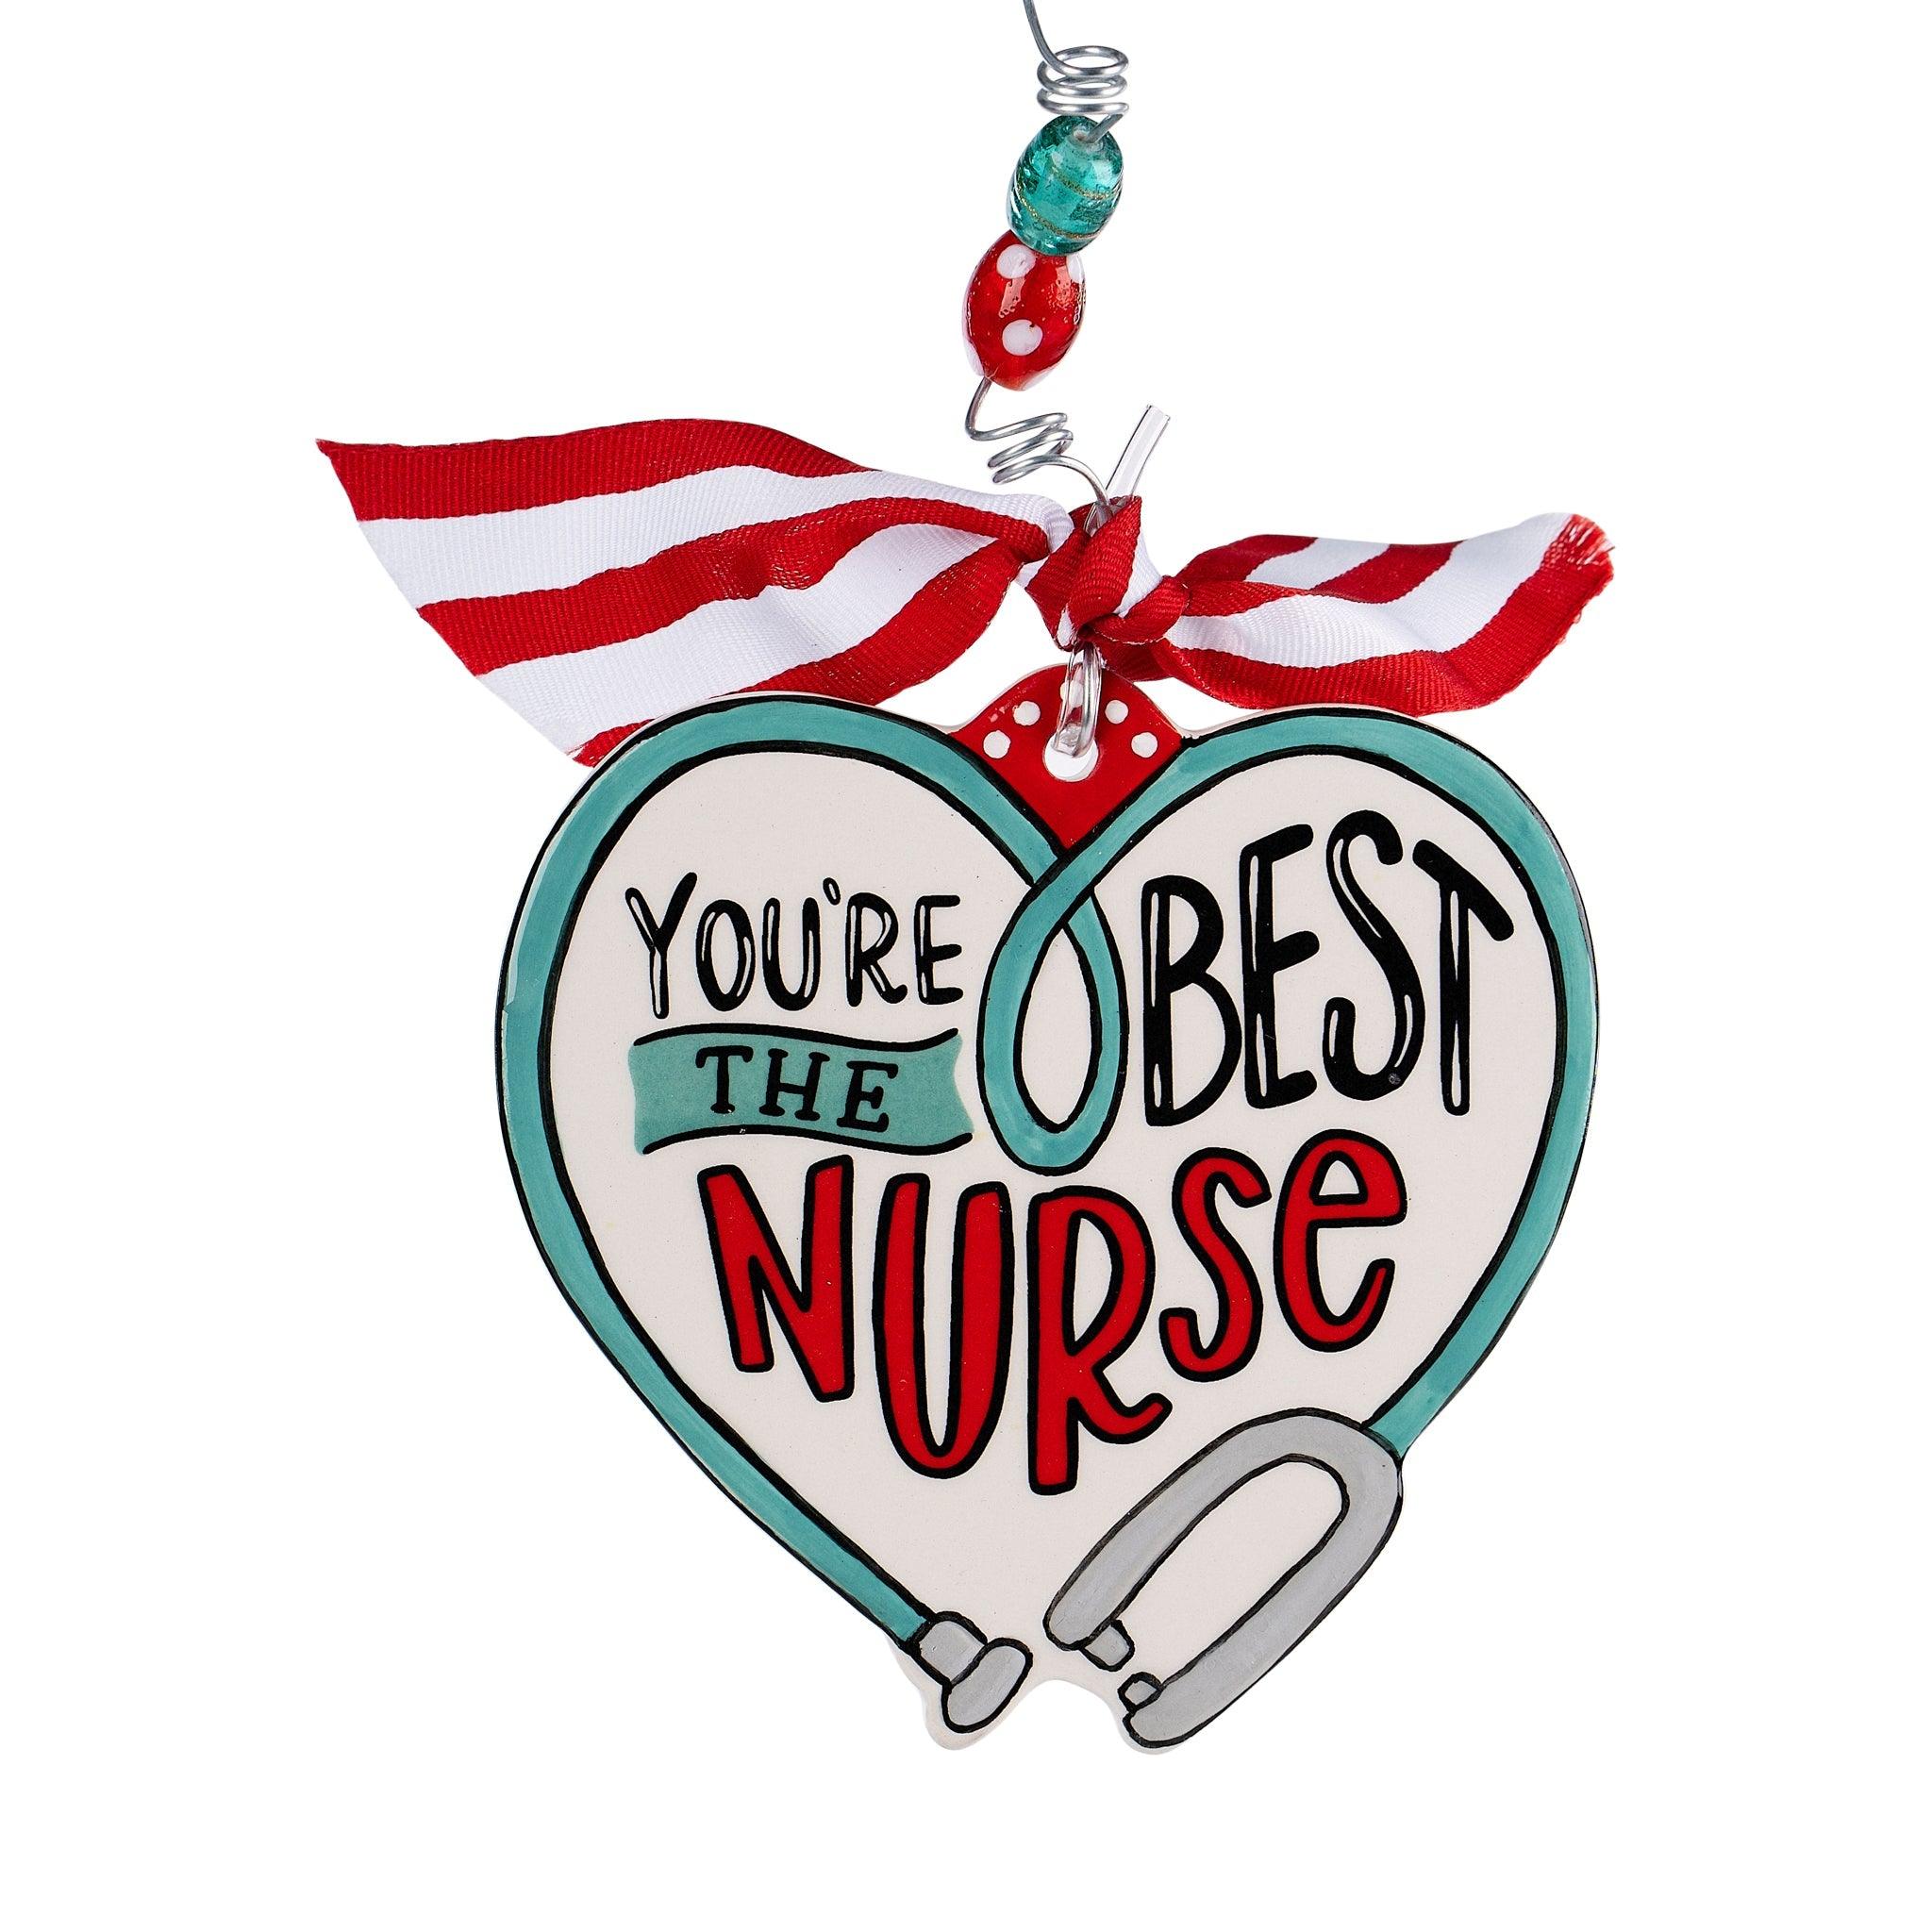 Best Nurse Ever Ribbon Nurses Day Card